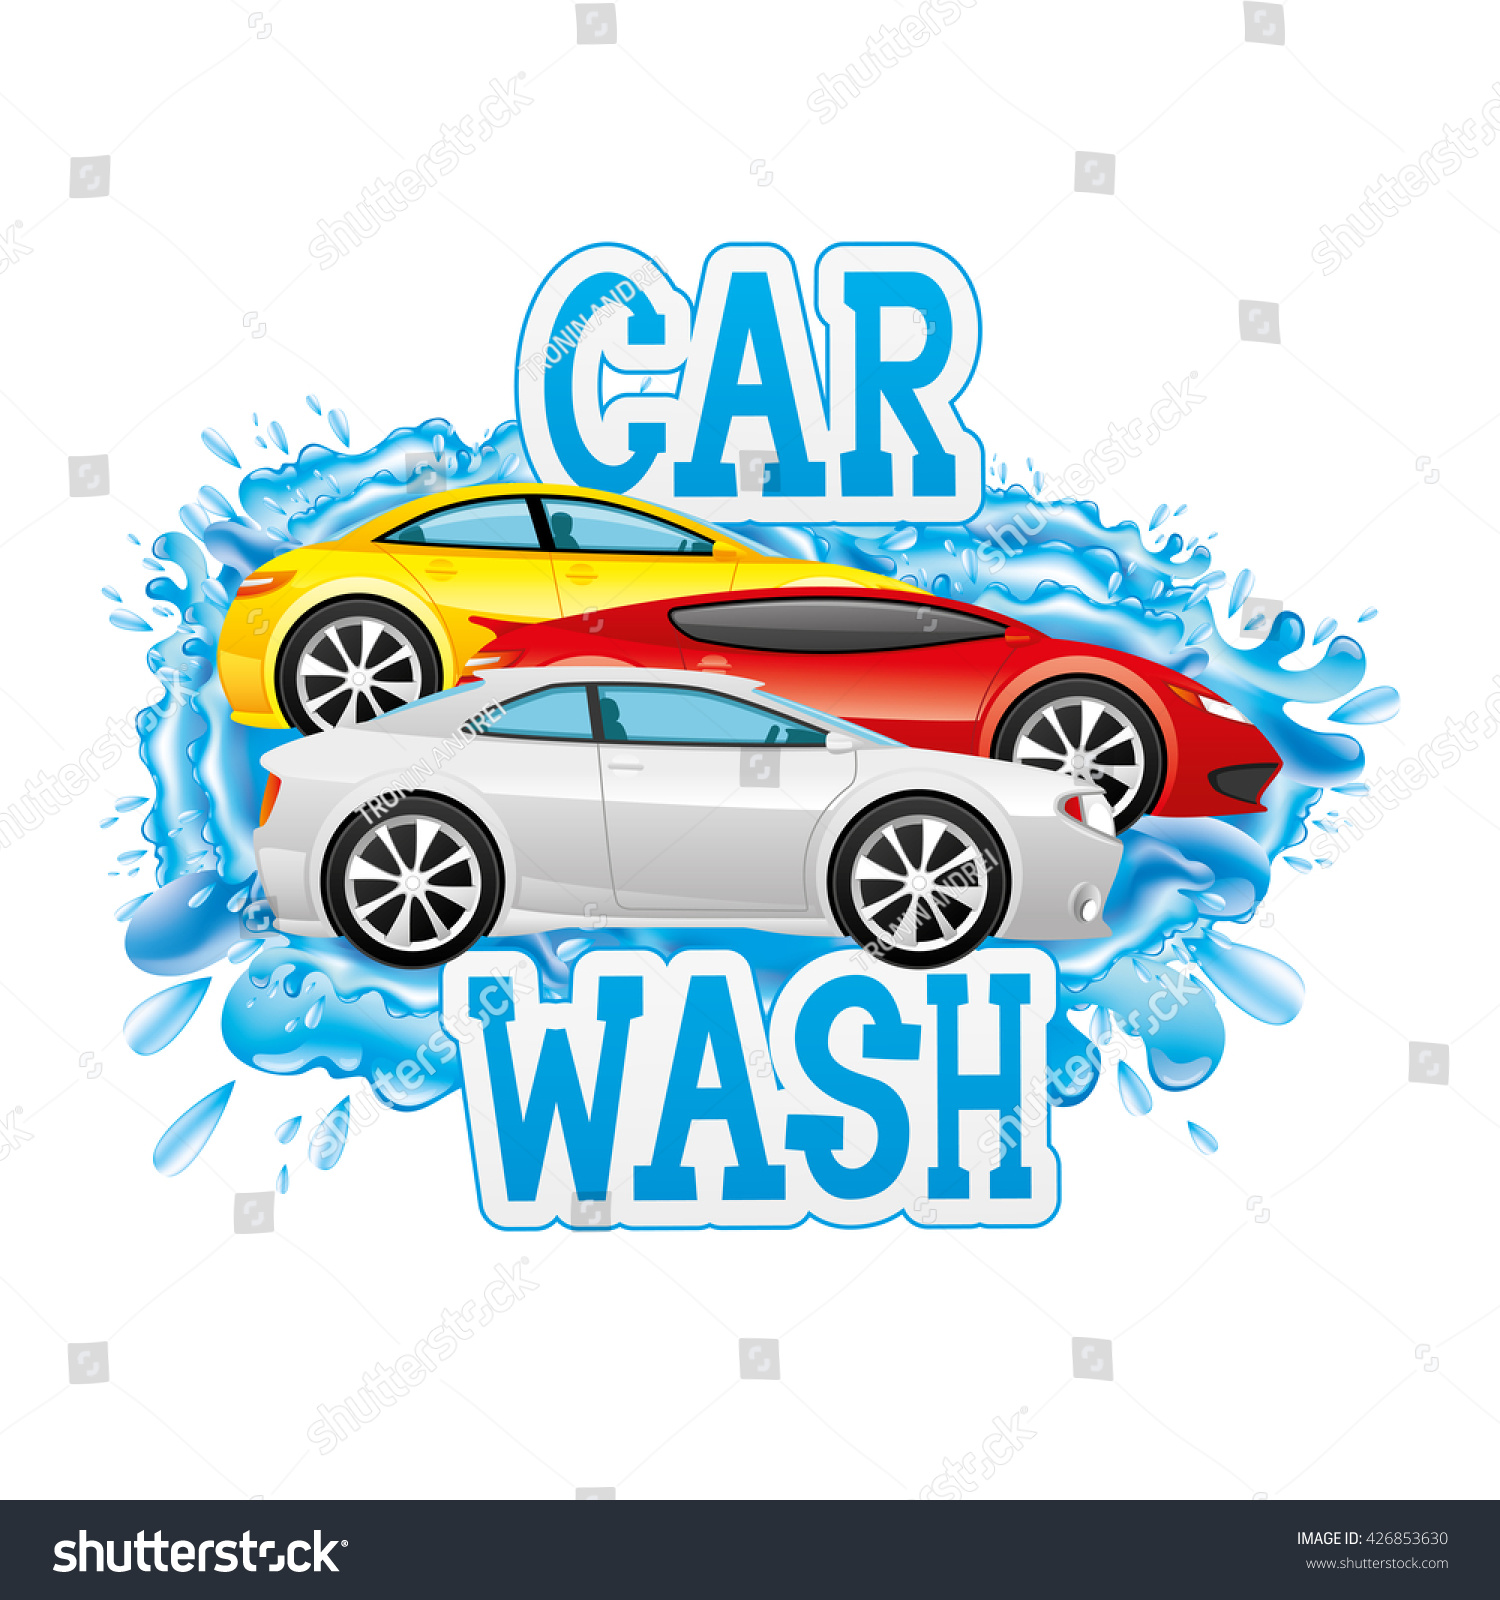 Vector Sign. Car Wash. - 426853630 : Shutterstock